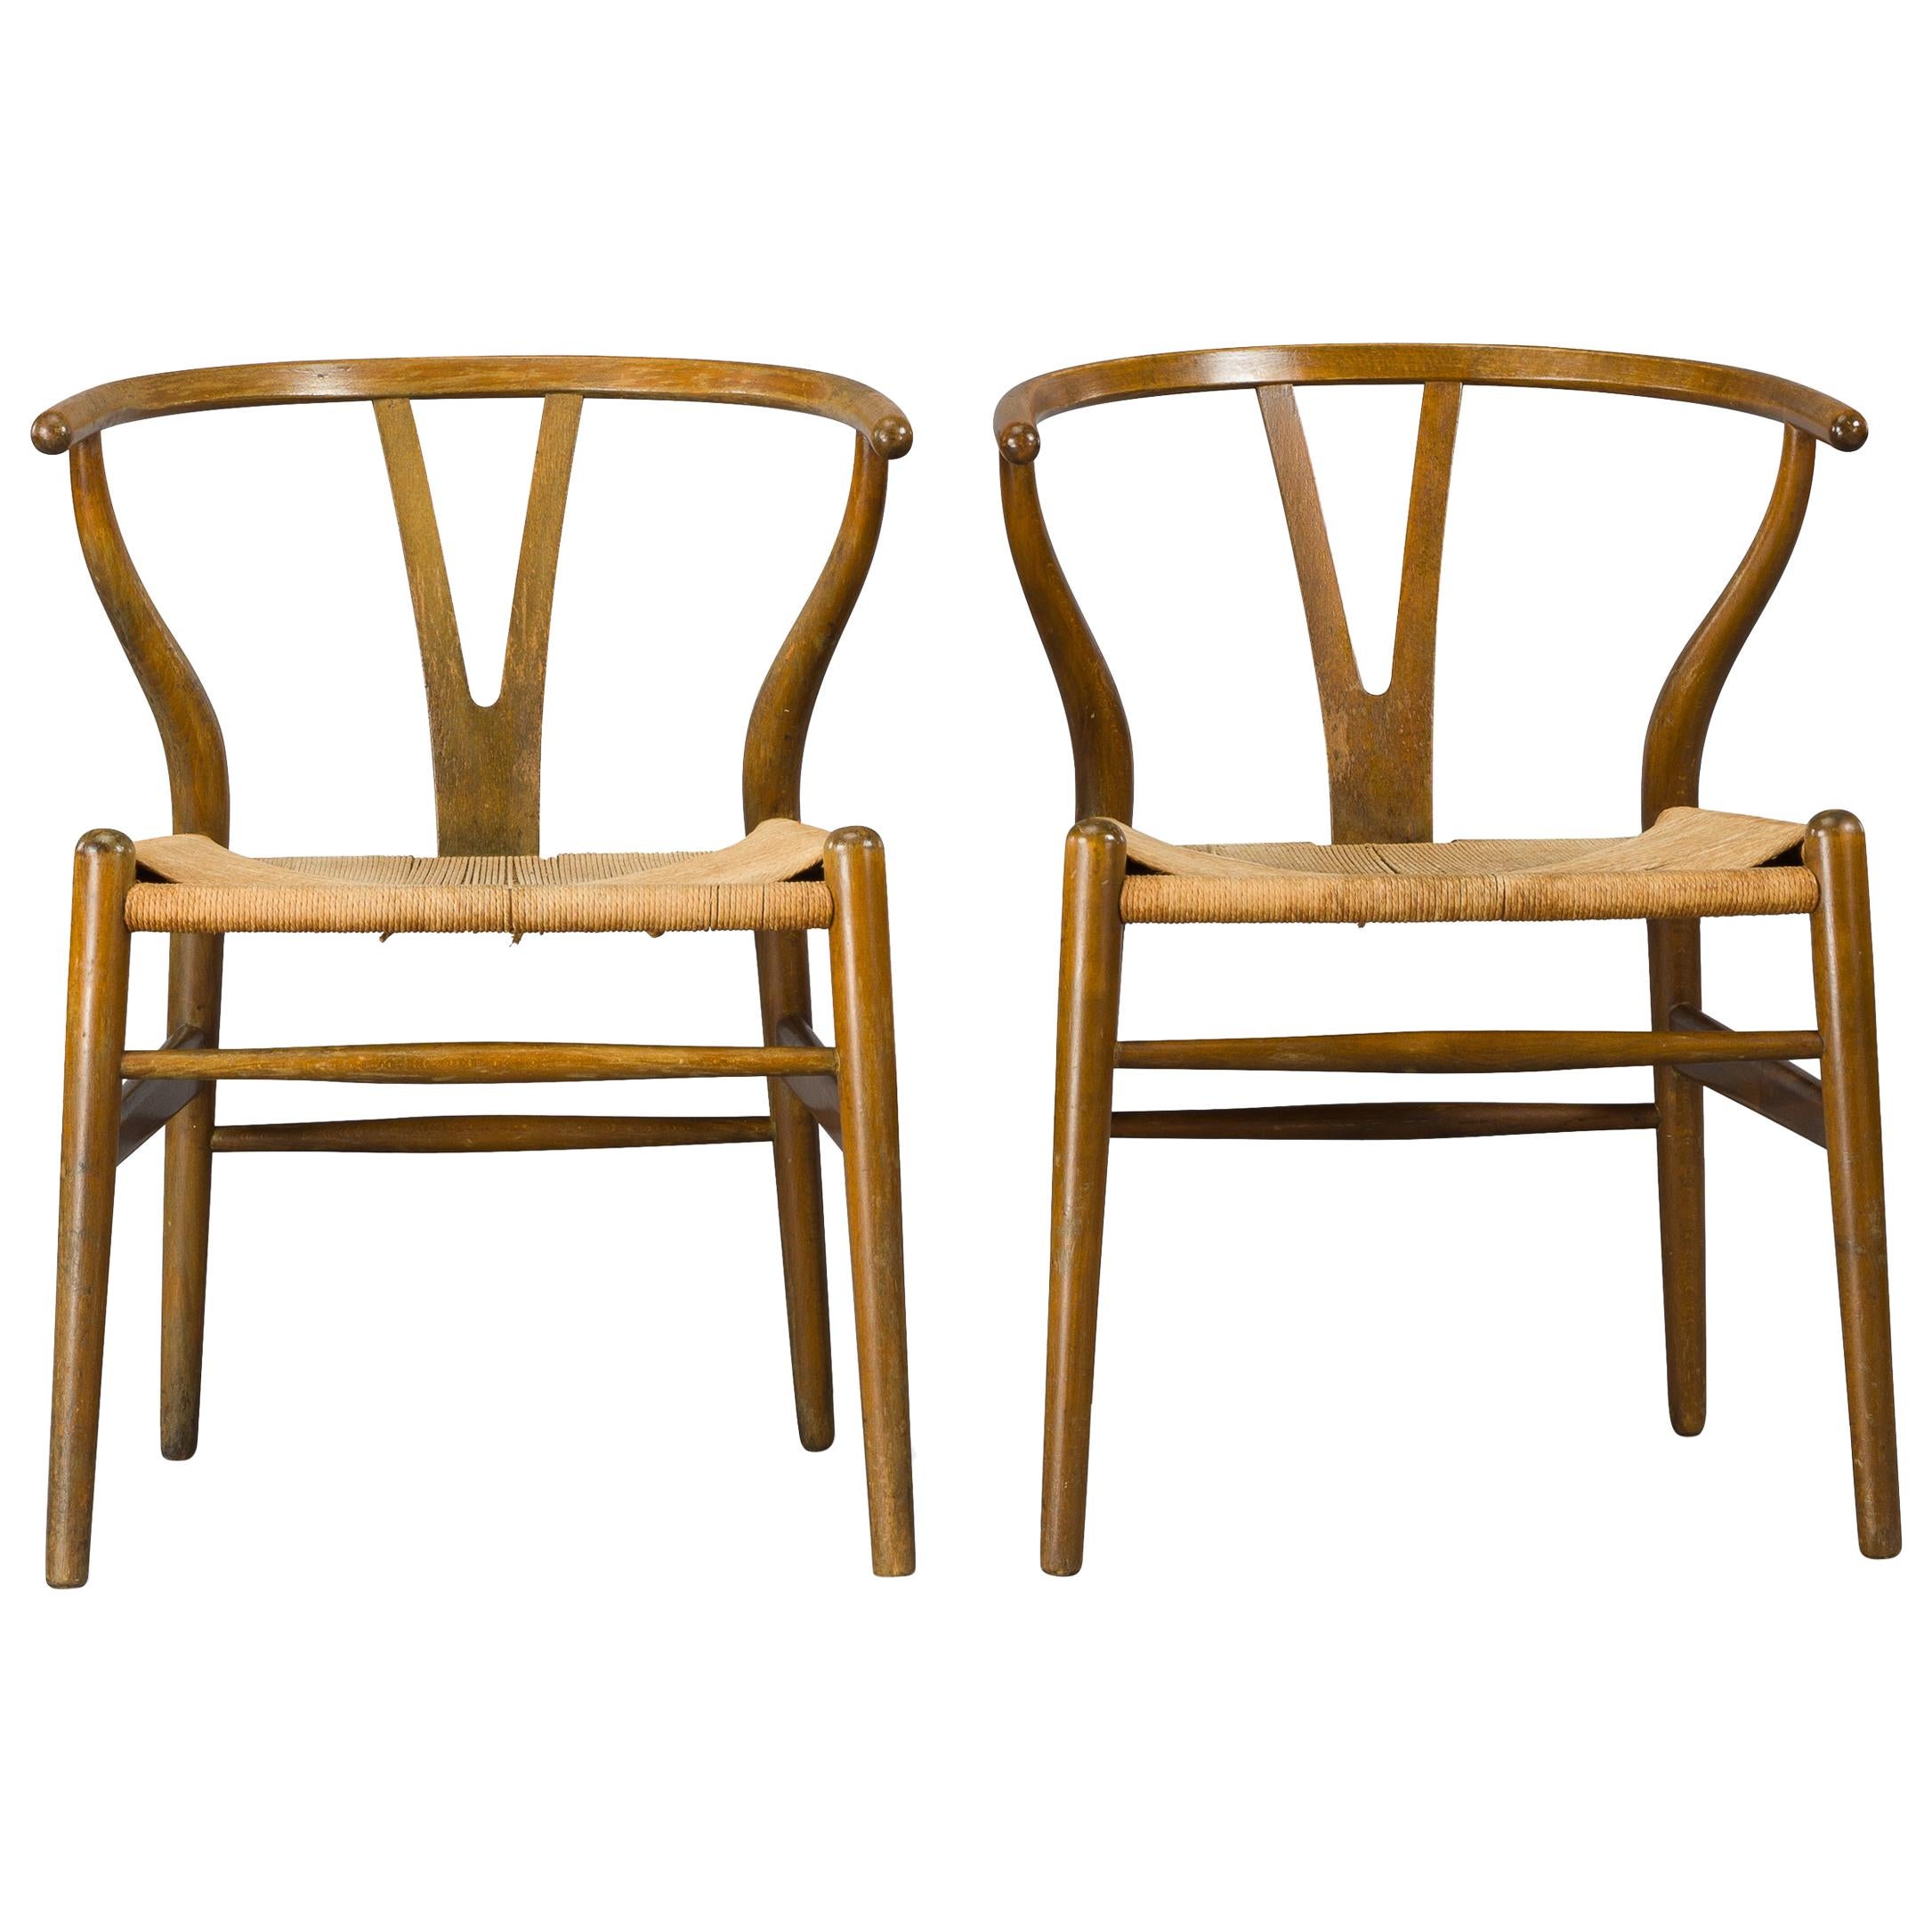 Midcentury CH24 Wishbone Chairs by Hans J. Wegner for Carl Hansen & Søn Made in